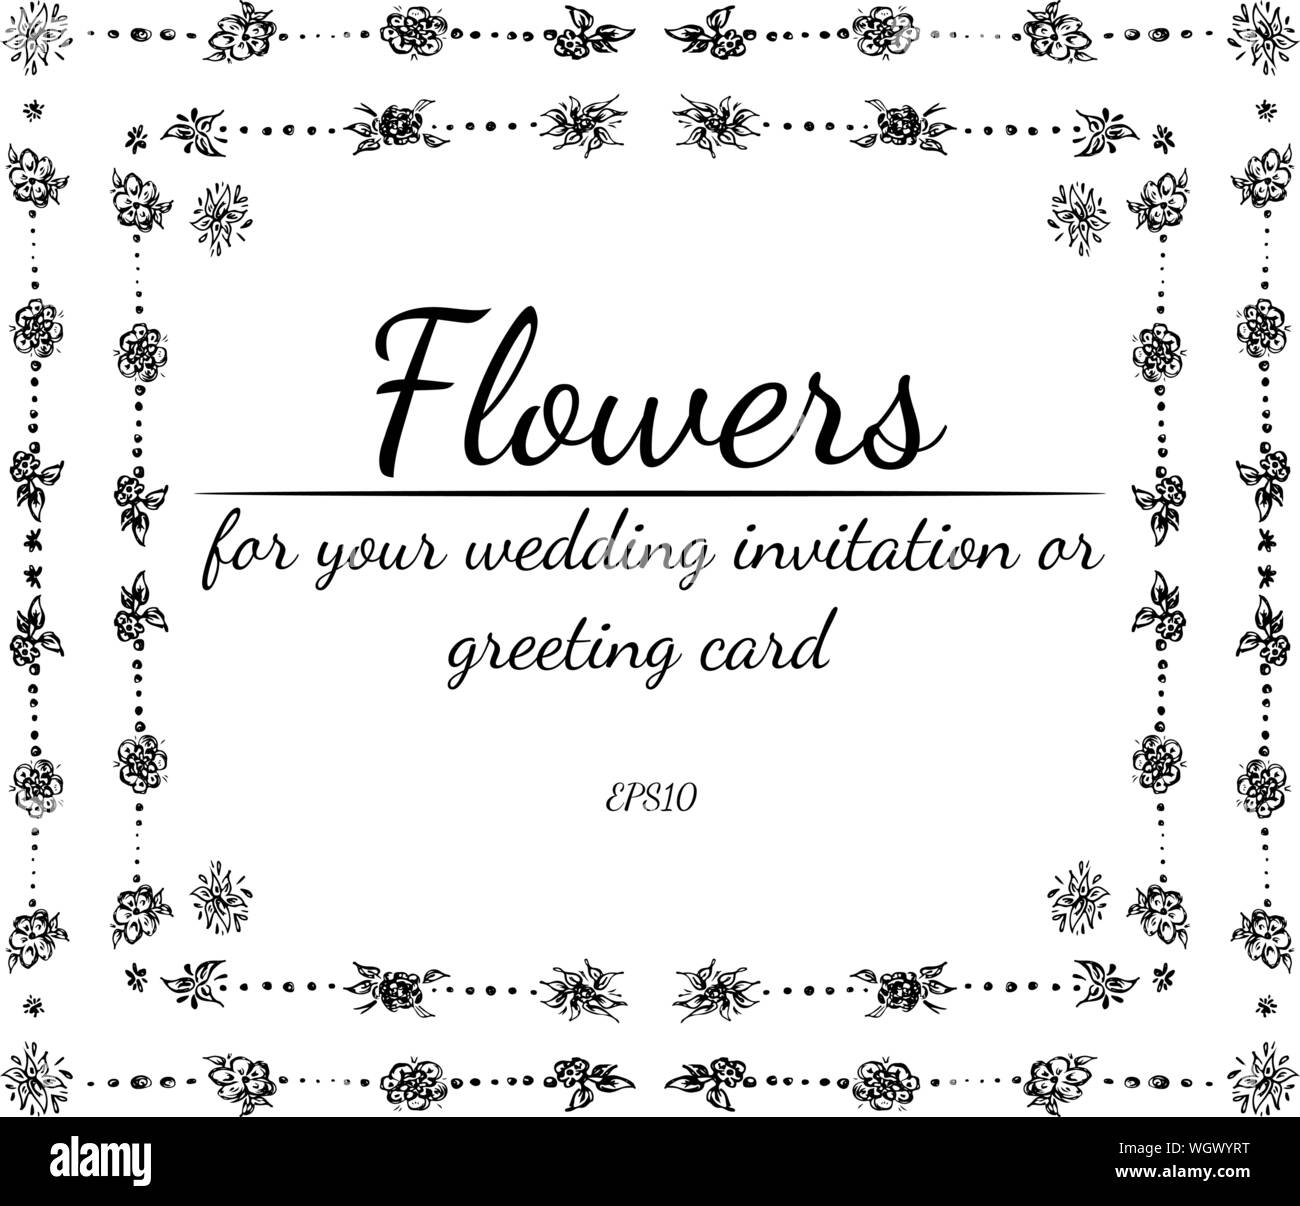 Wedding floral frame in vintage style isolated on black background. Nature illustration. Wedding pattern. Vector vintage illustration. Floral frame de Stock Vector